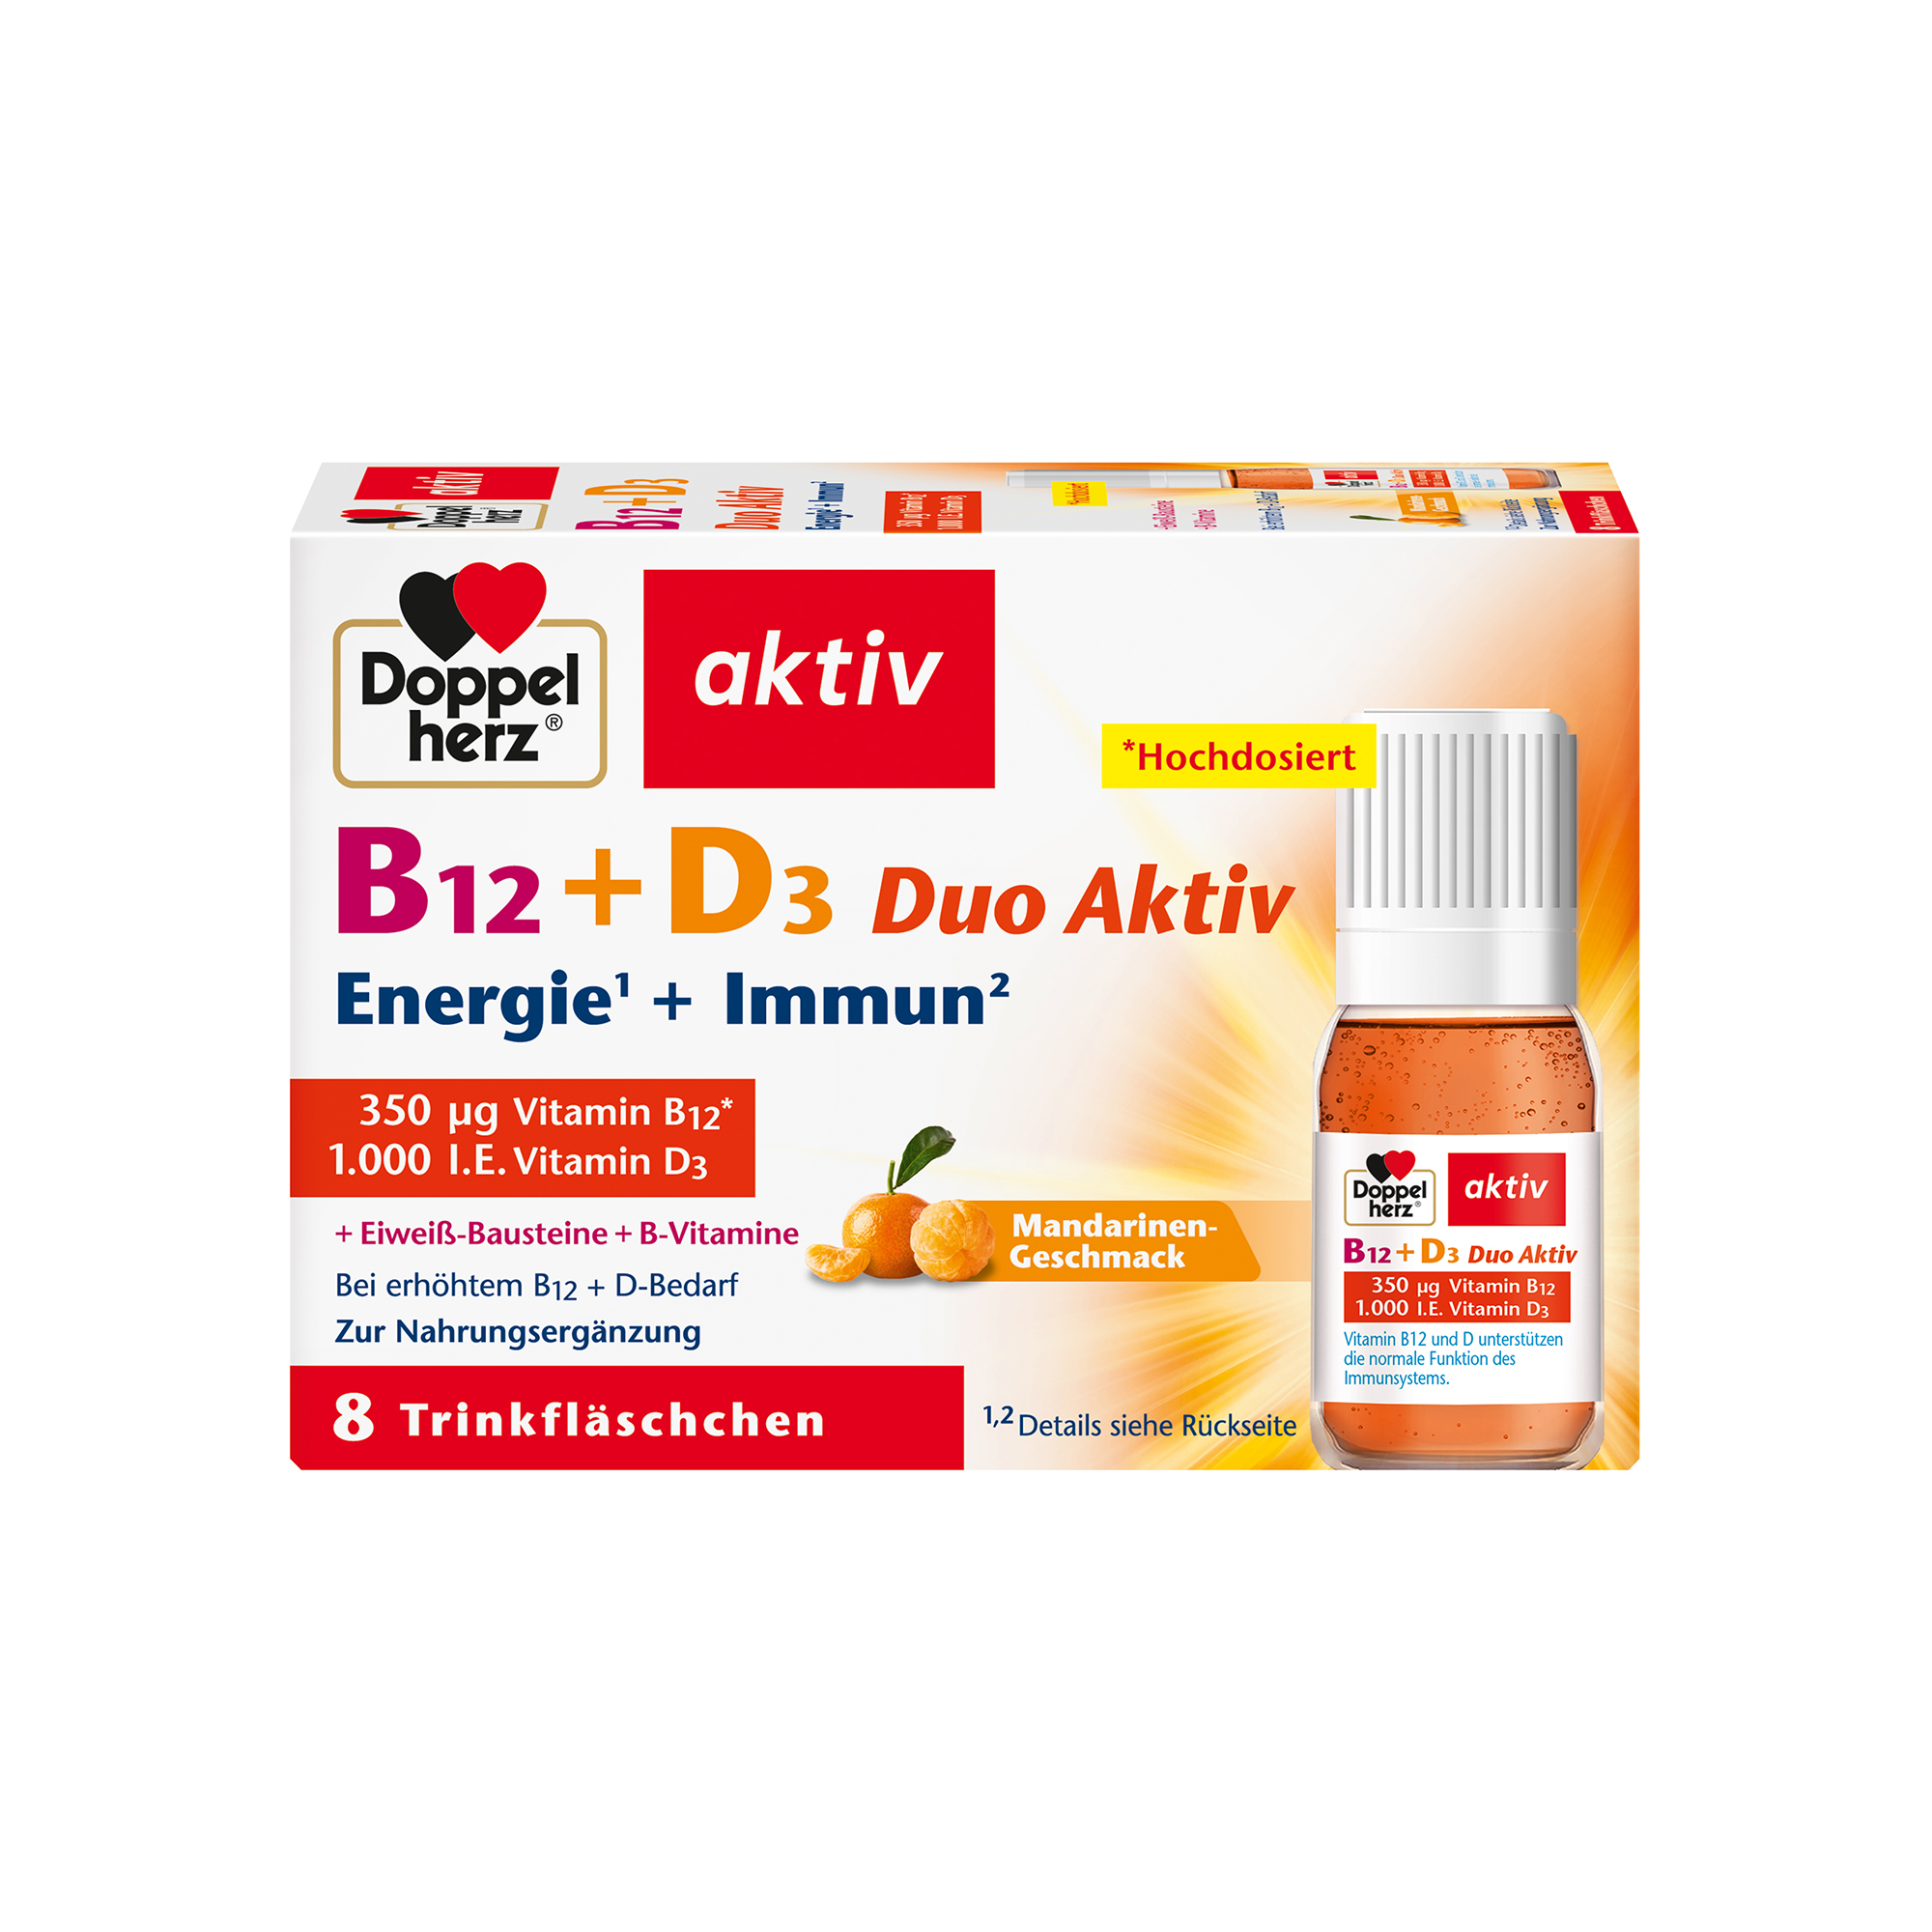 Doppelherz aktiv B12 + D3 Duo Active, 8 Drinking Bottles